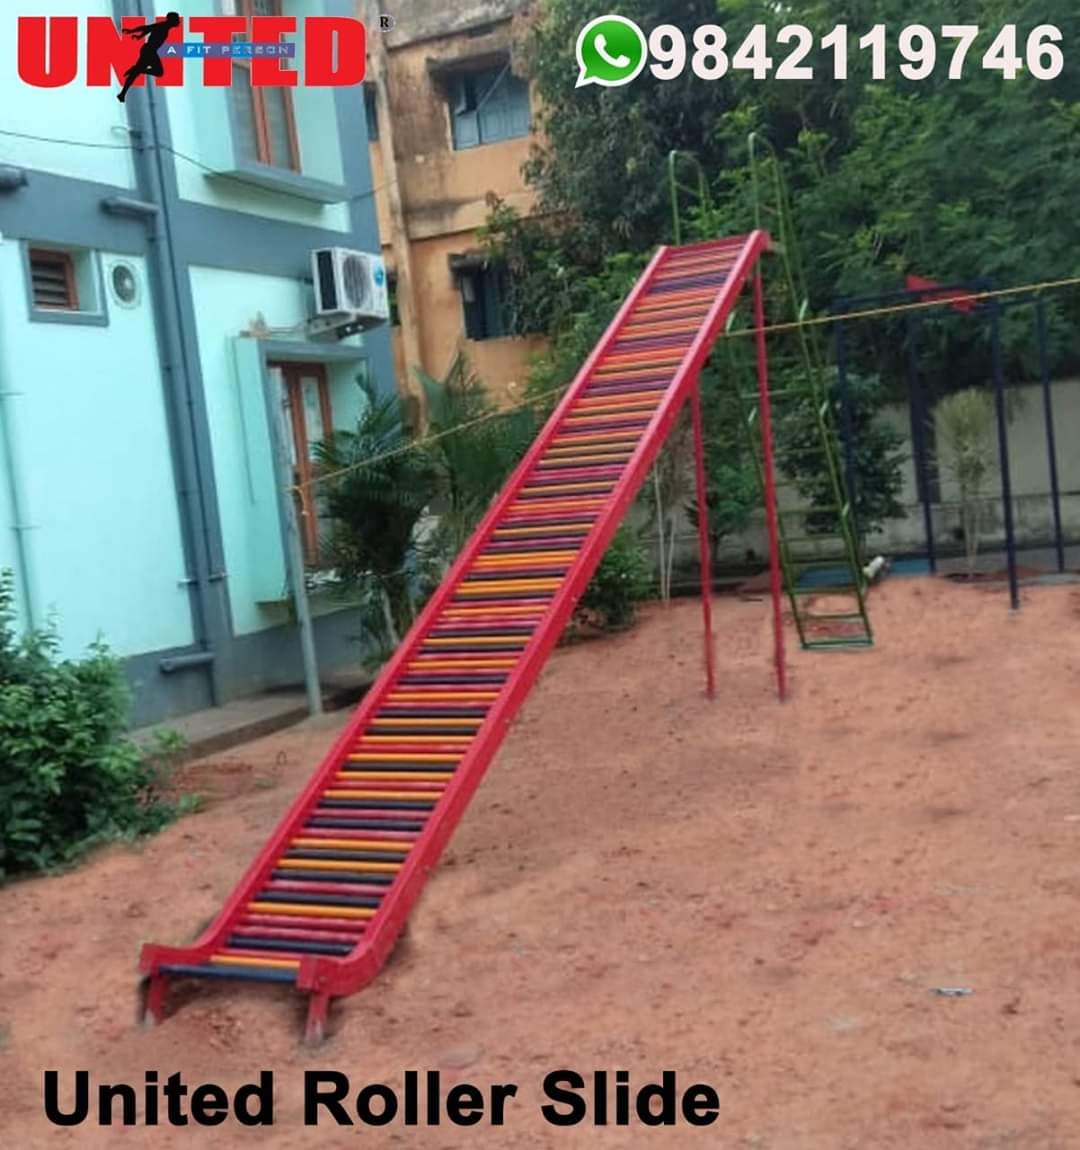 United Roller Slide